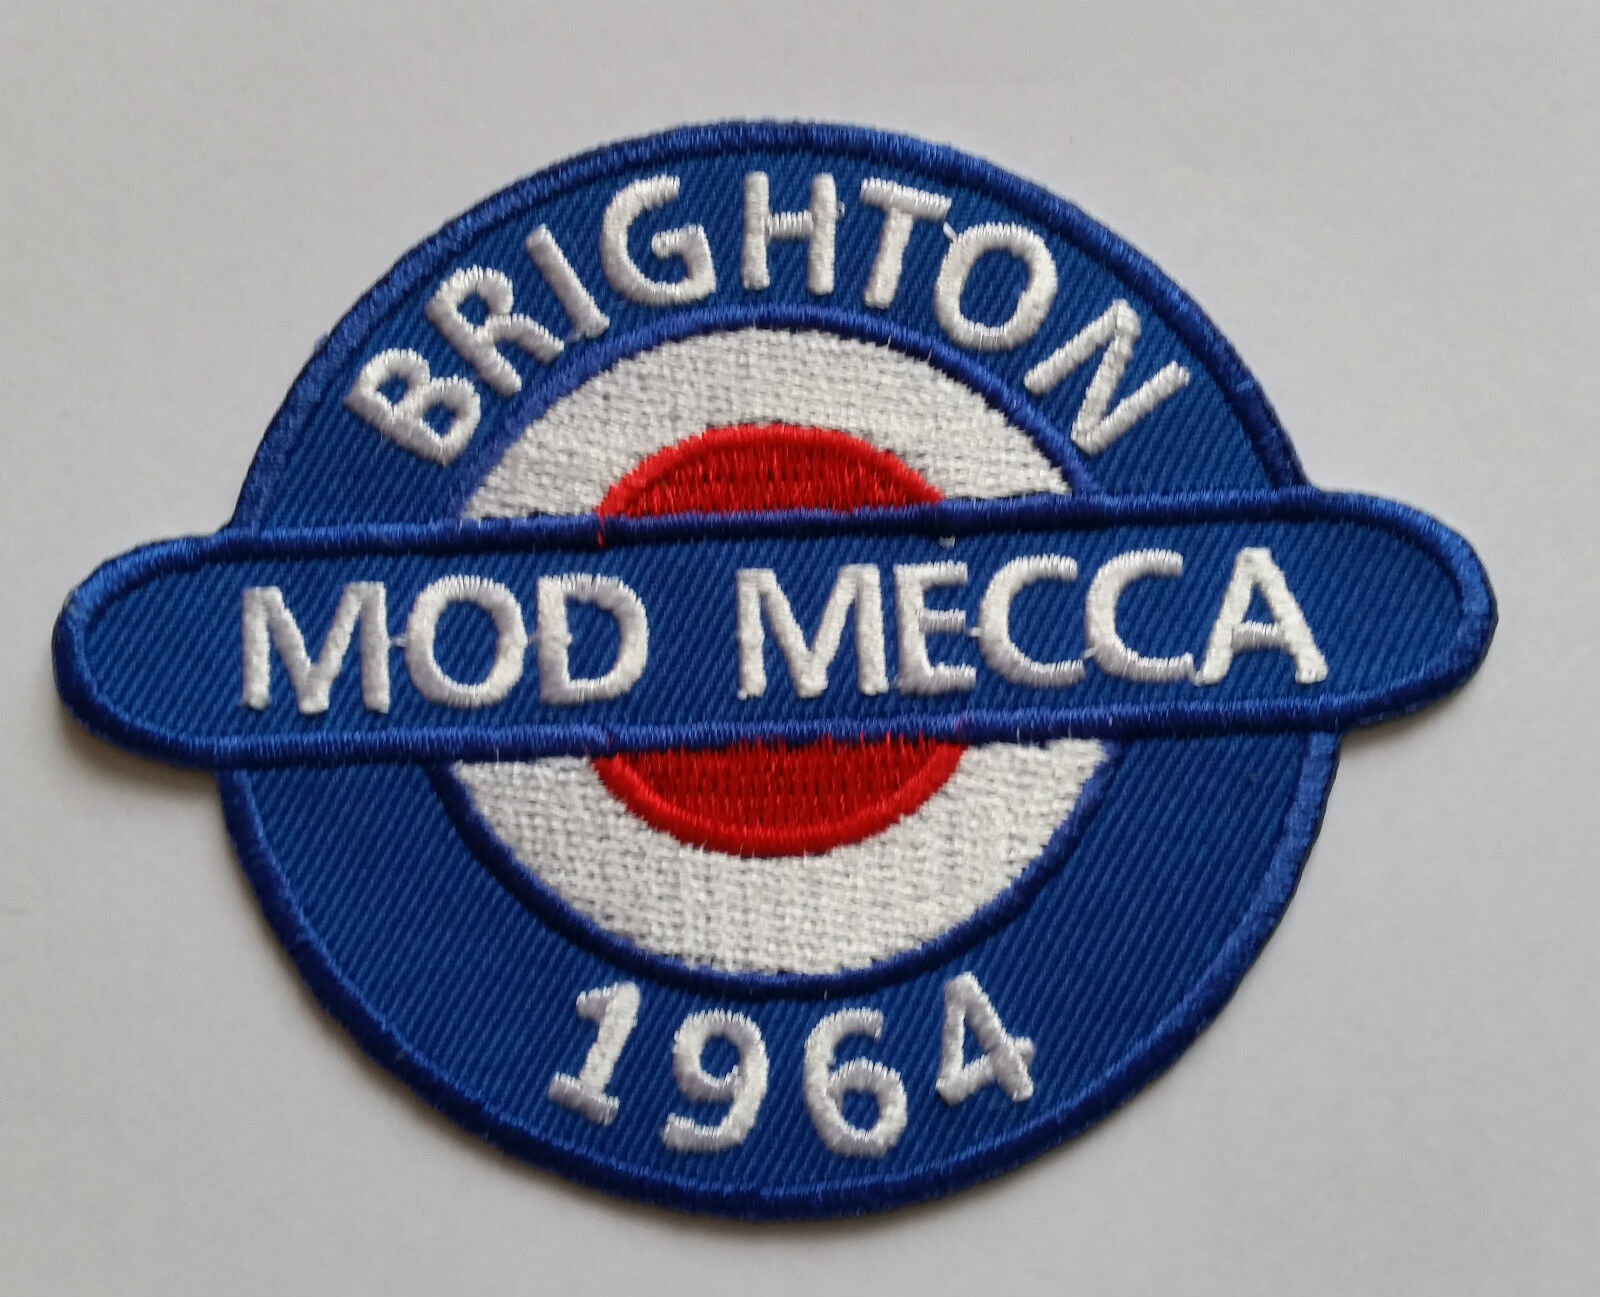 Mod Patch Brighton Mod Mecca 1964 Sew / Iron On Badge Mod Culture Way Of Life